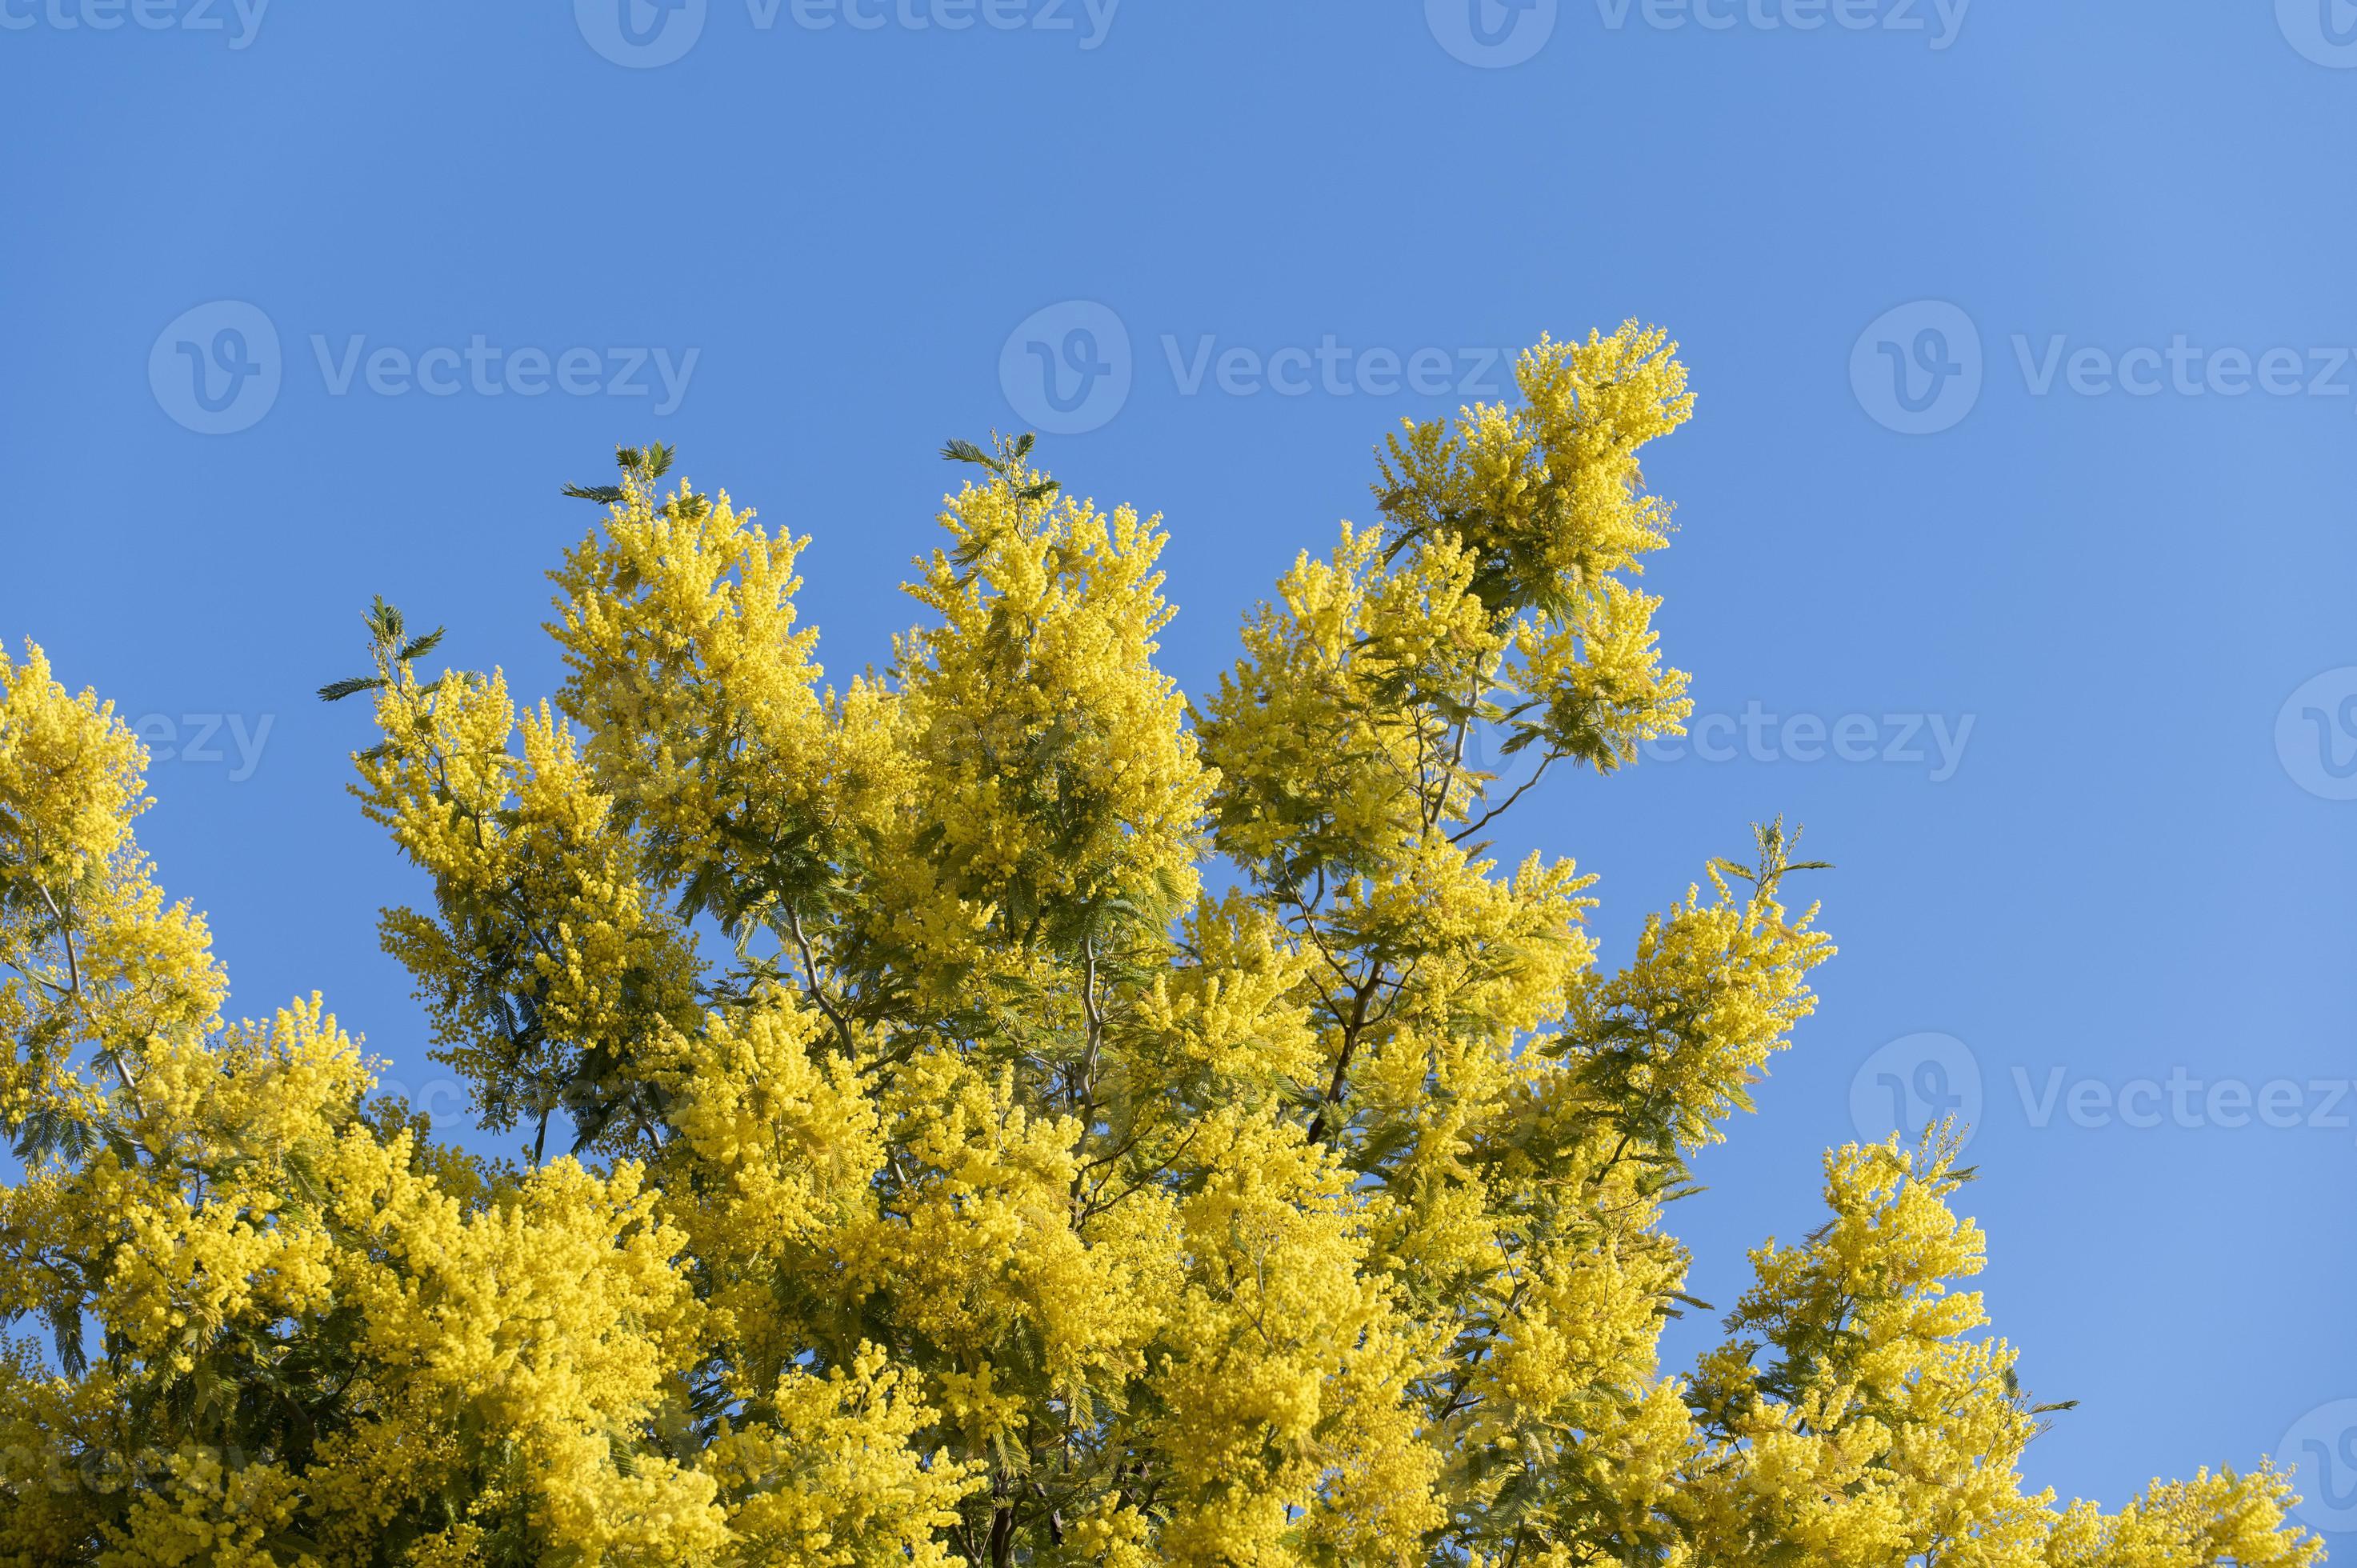 planta mimosa com uma cor amarela intensa 2689838 Foto de stock no Vecteezy